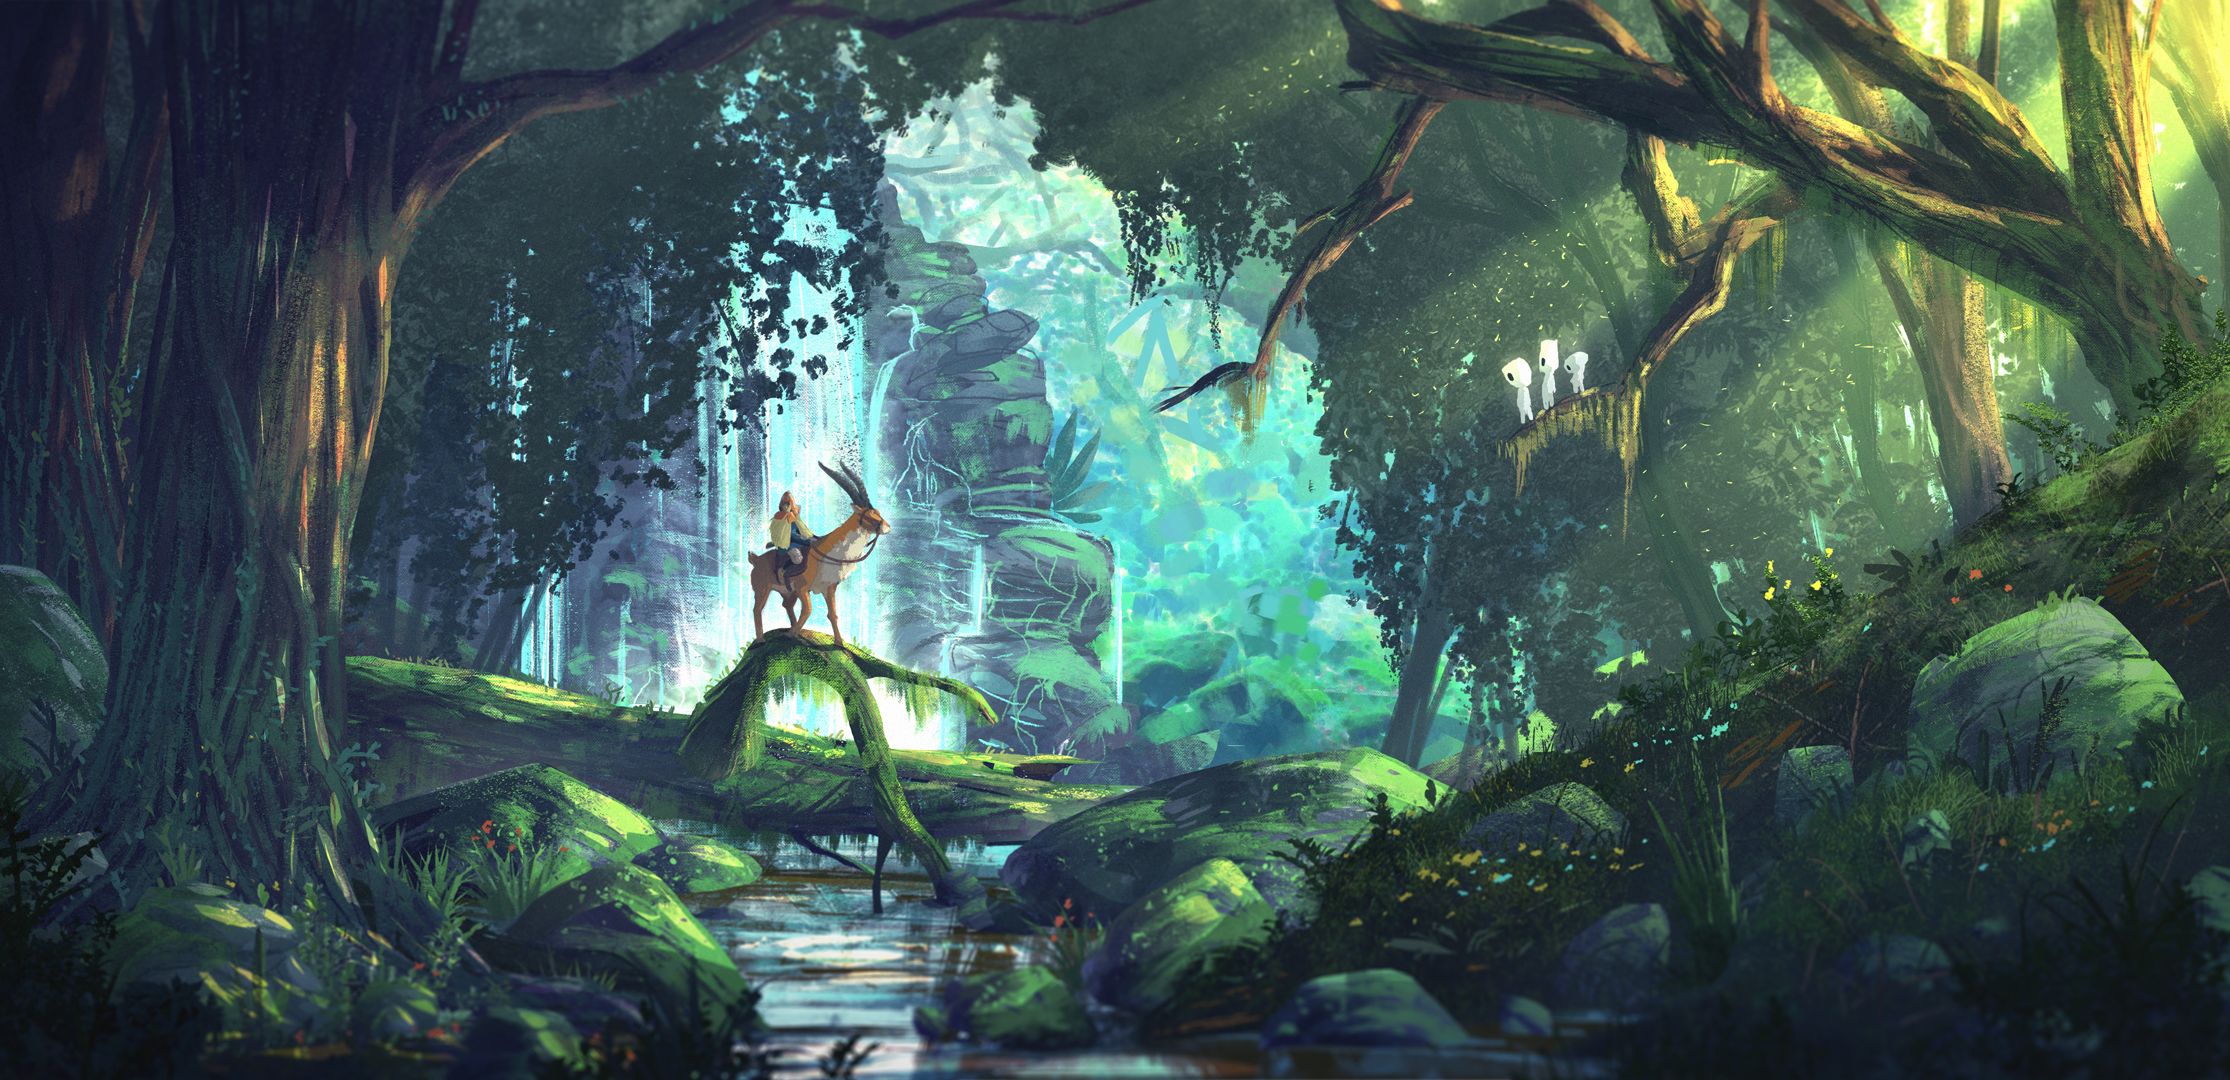 Princess Mononoke painted Forest Wallpaper (high res)